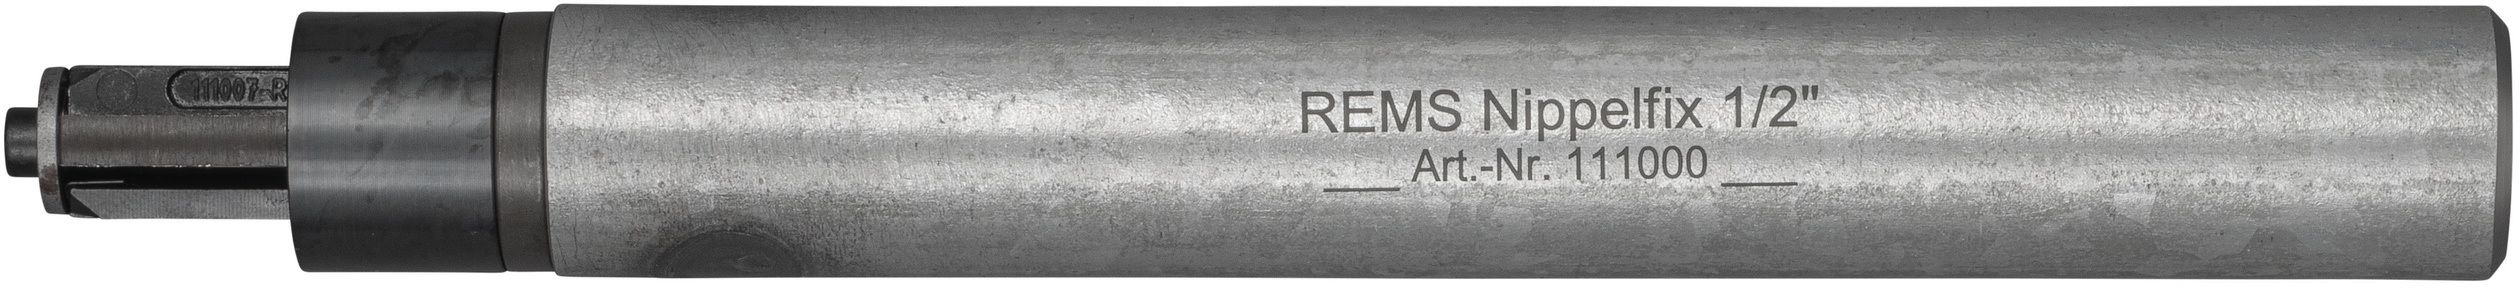 REMS Nippelfix 111000, 1/2" - Sanitärwerkzeuge